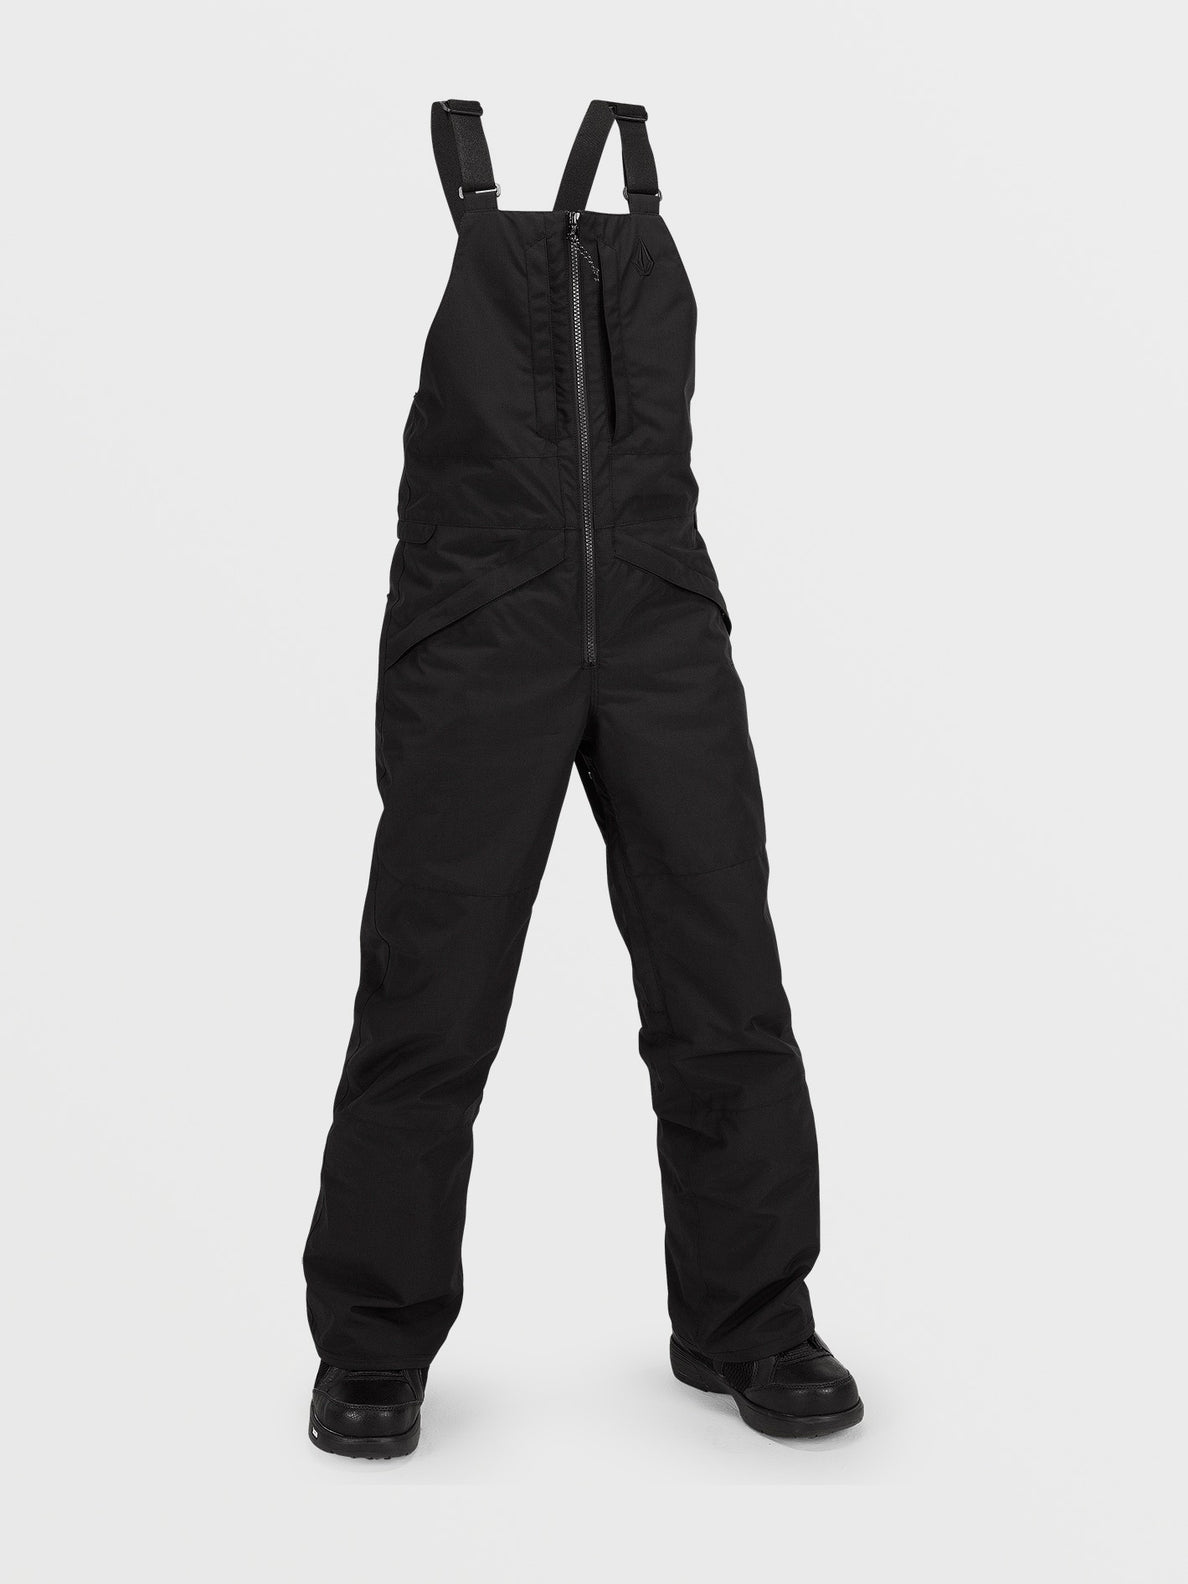 Slalom Youth Insulated Overall Bib Snow Pant - Size Medium, Black